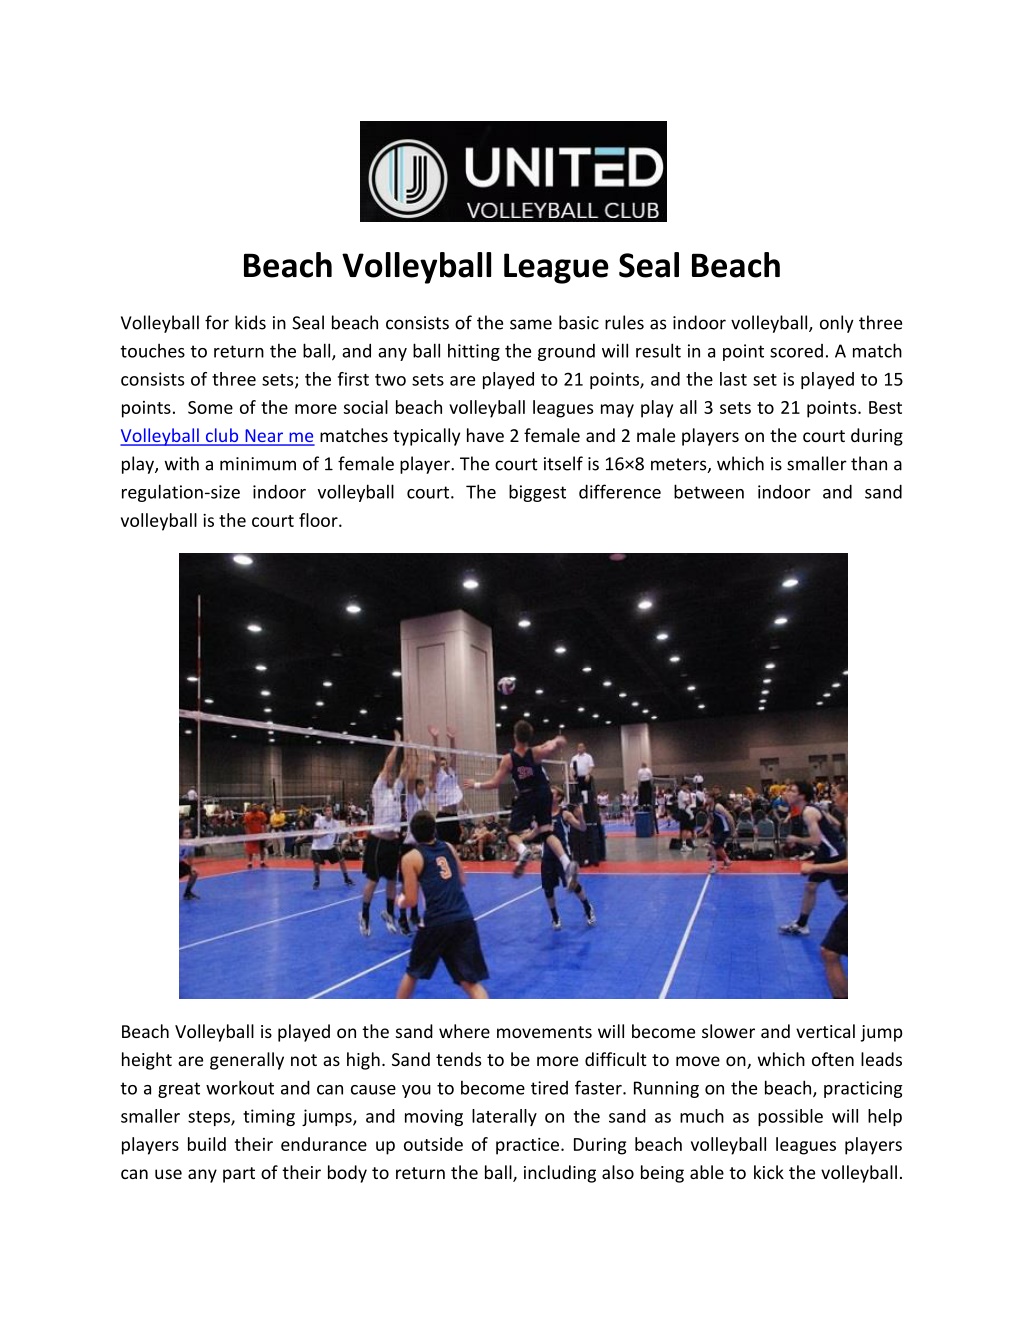 PPT Beach Volleyball League Seal Beach PowerPoint Presentation, free